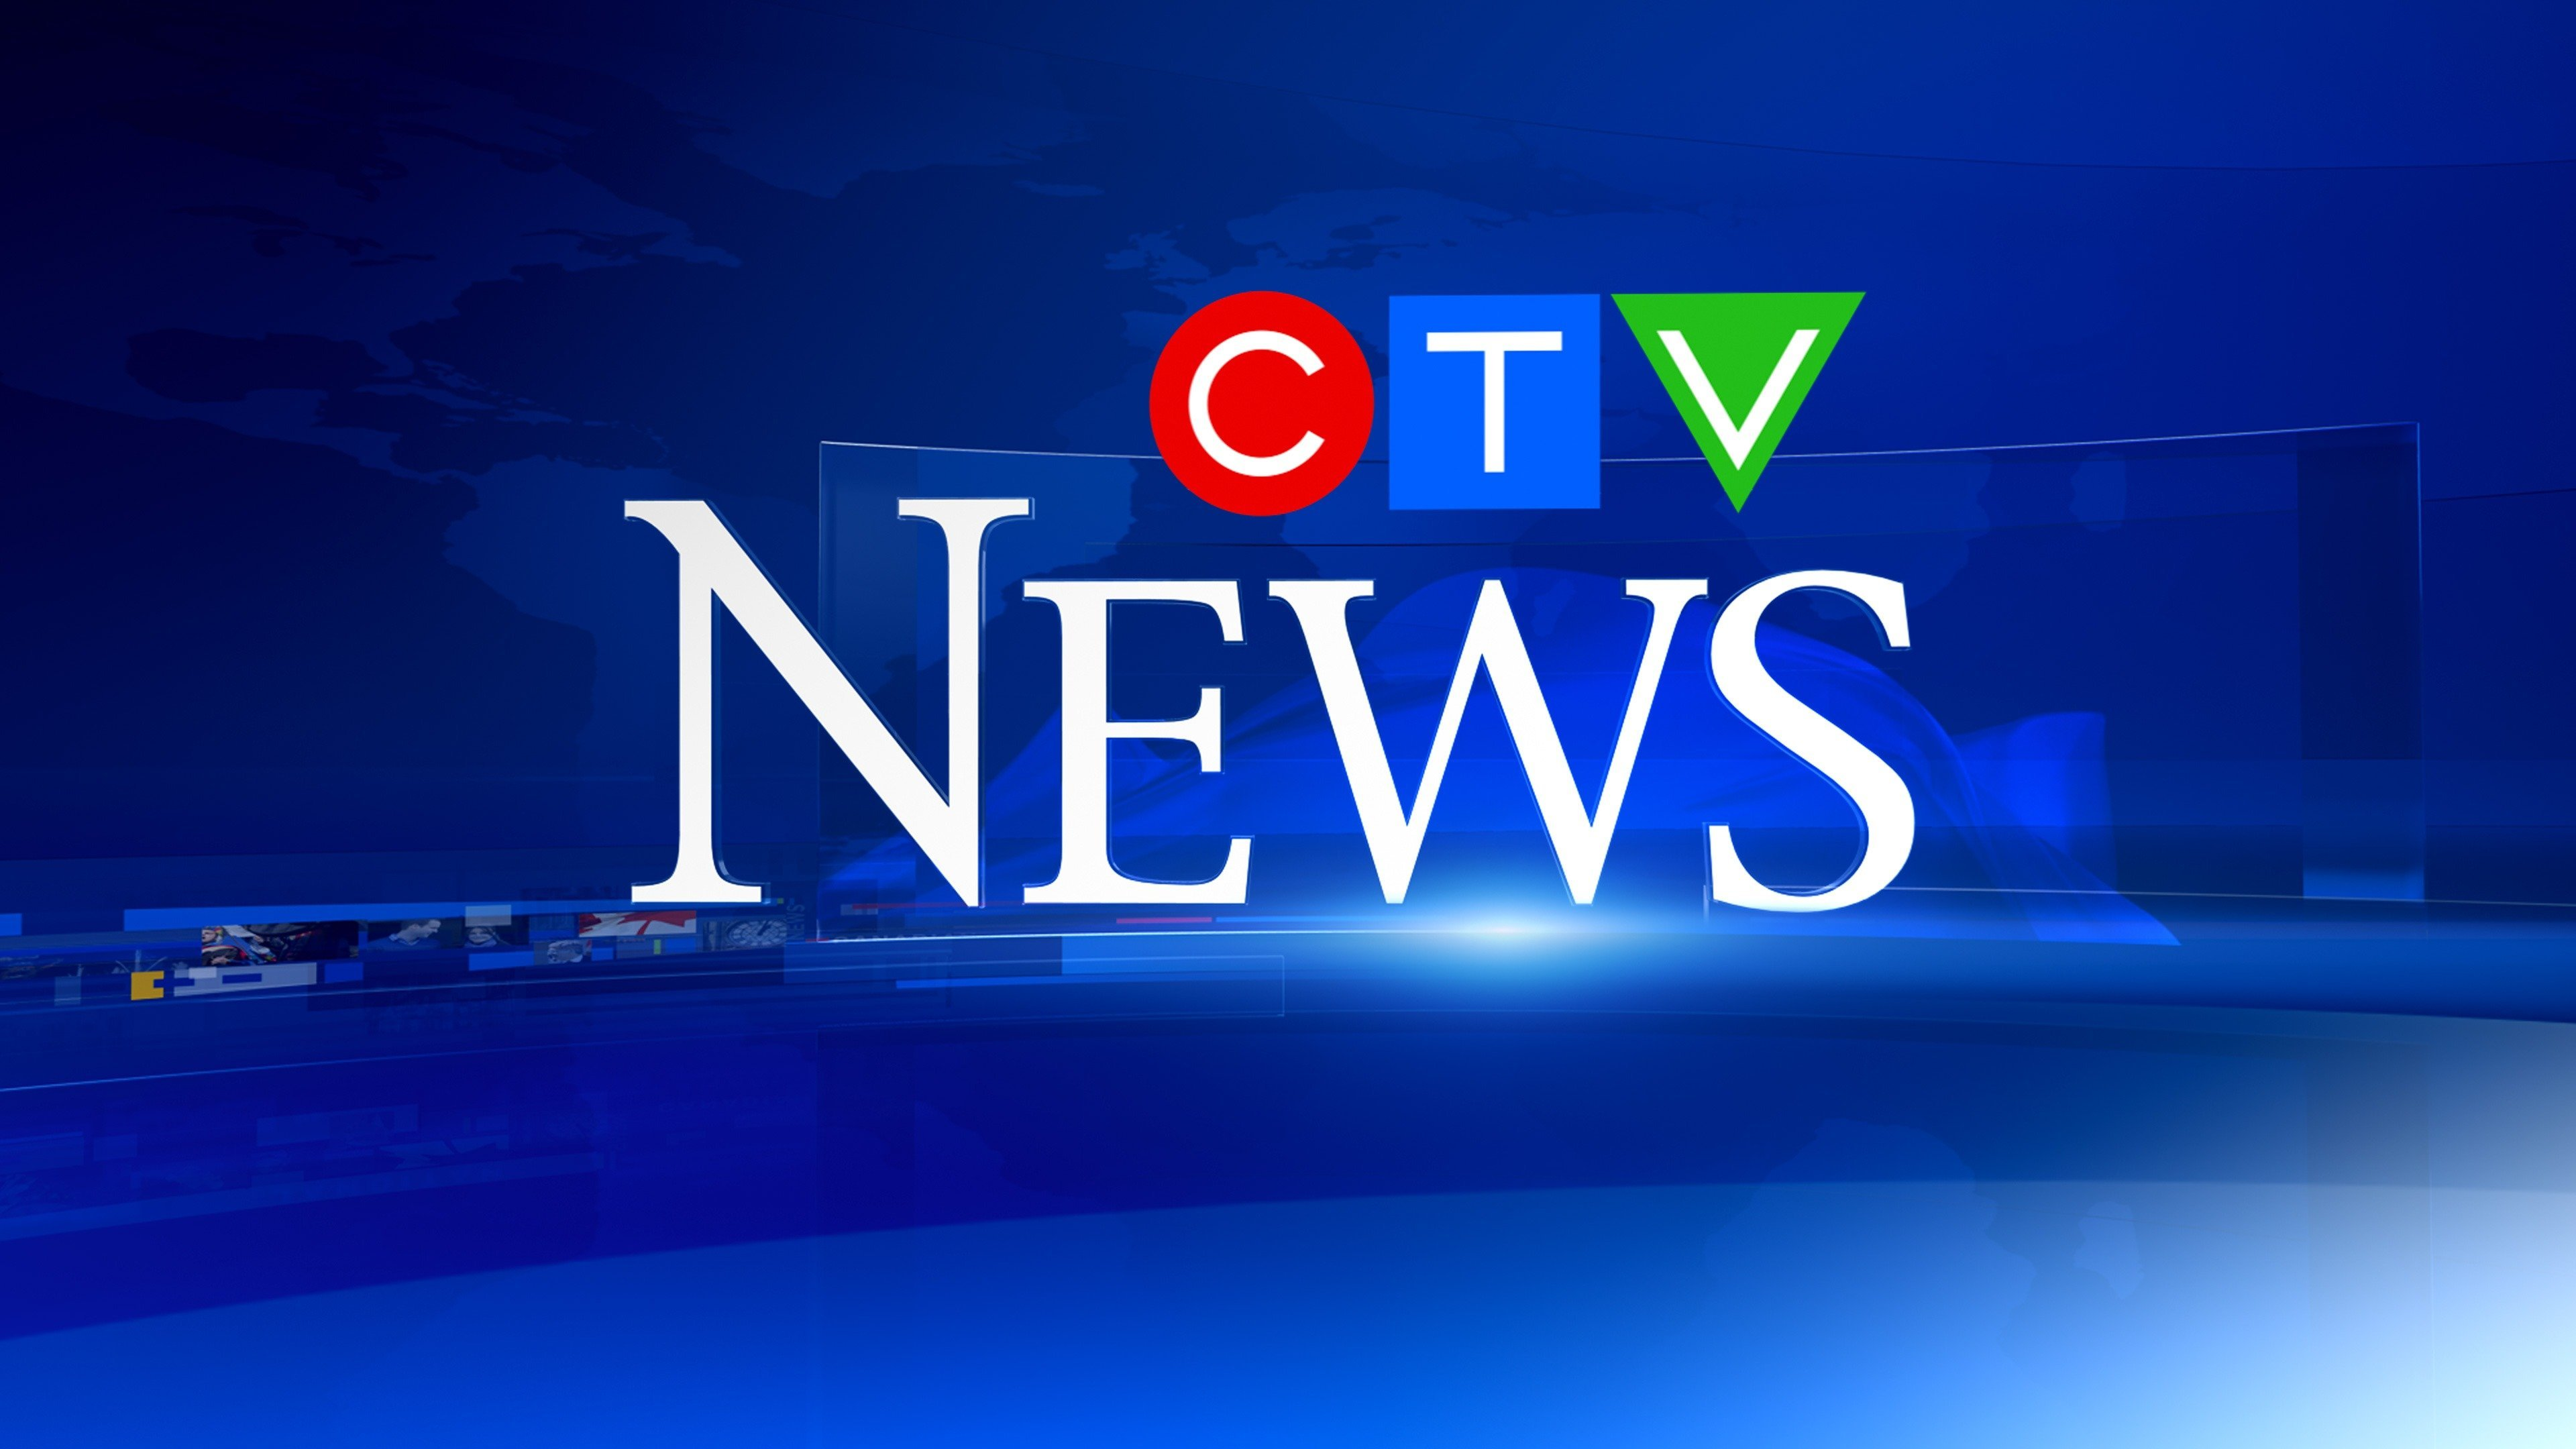 CTV News Regina